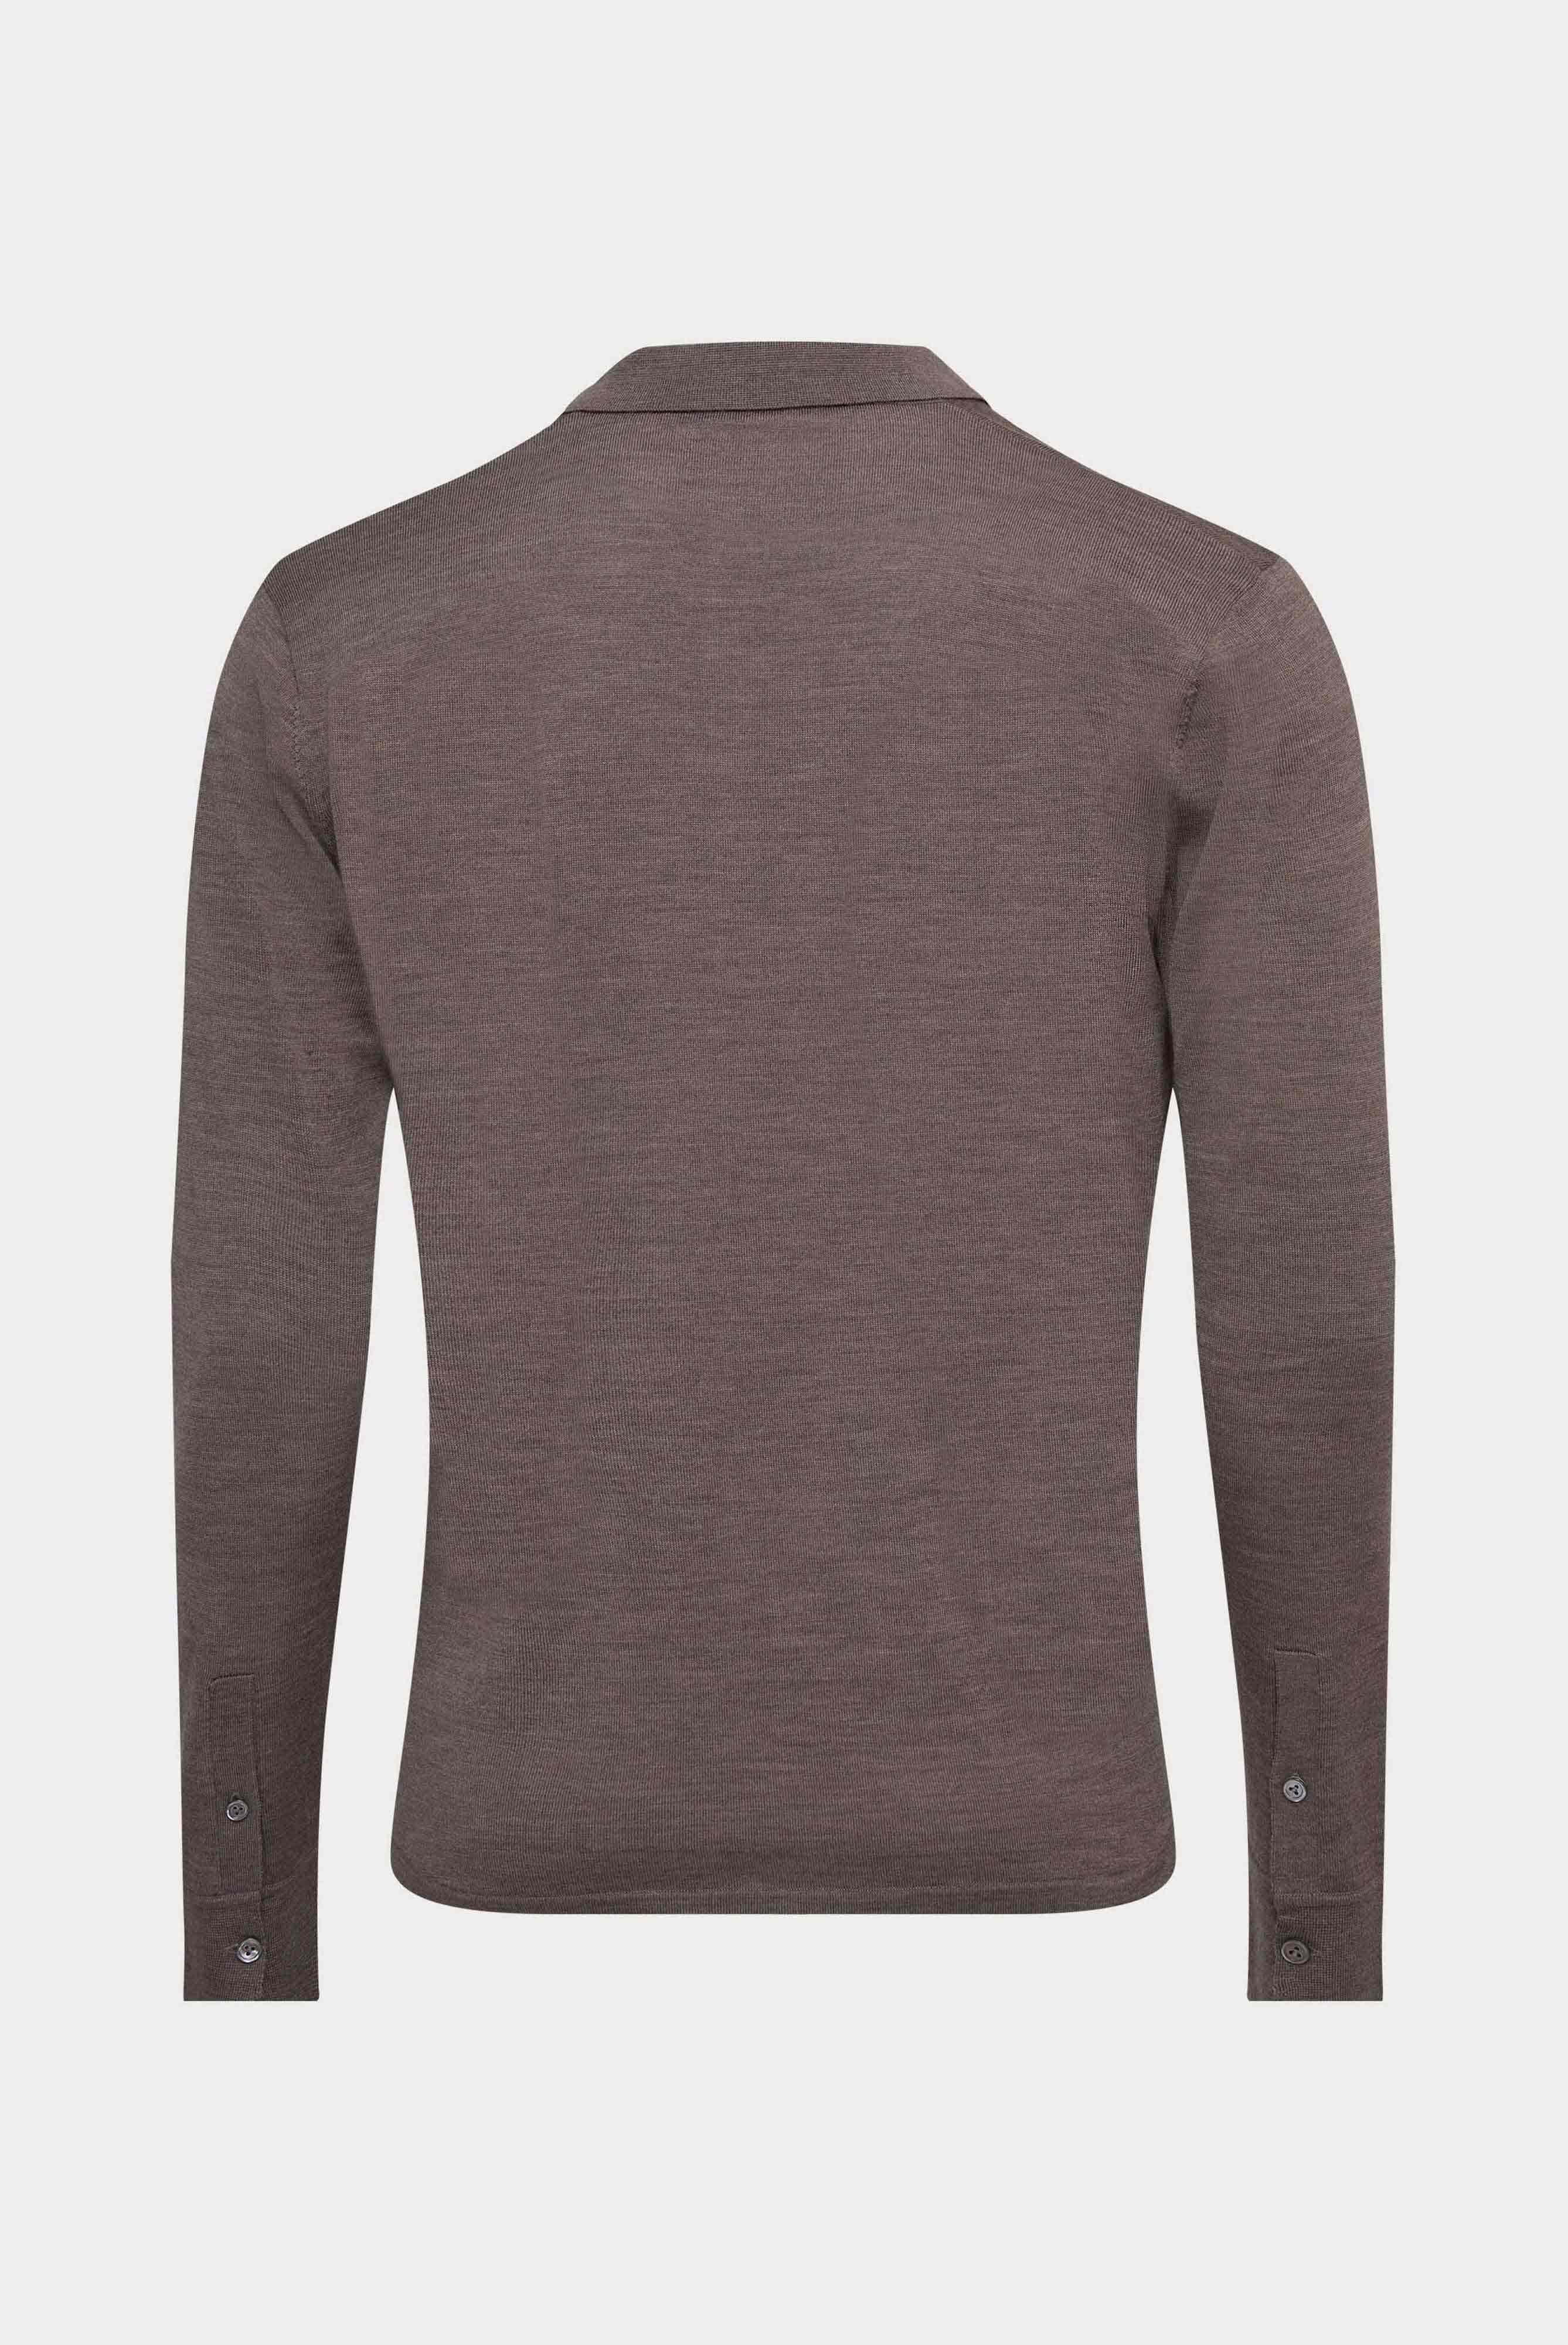 Easy Iron Shirts+Knit Shirt in Ultrafine Merino+82.8611..S00173.170.XS